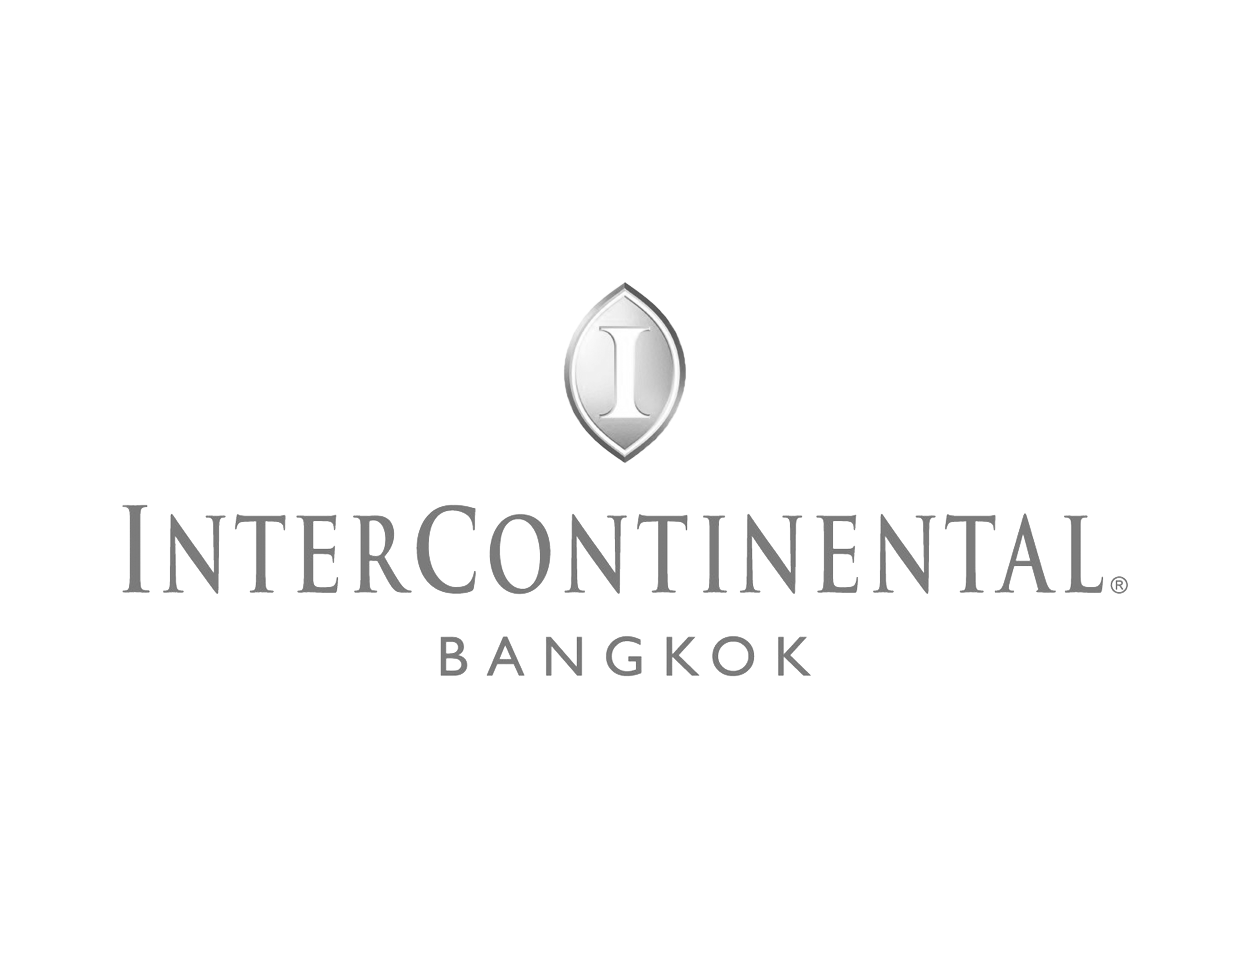 intercontinental